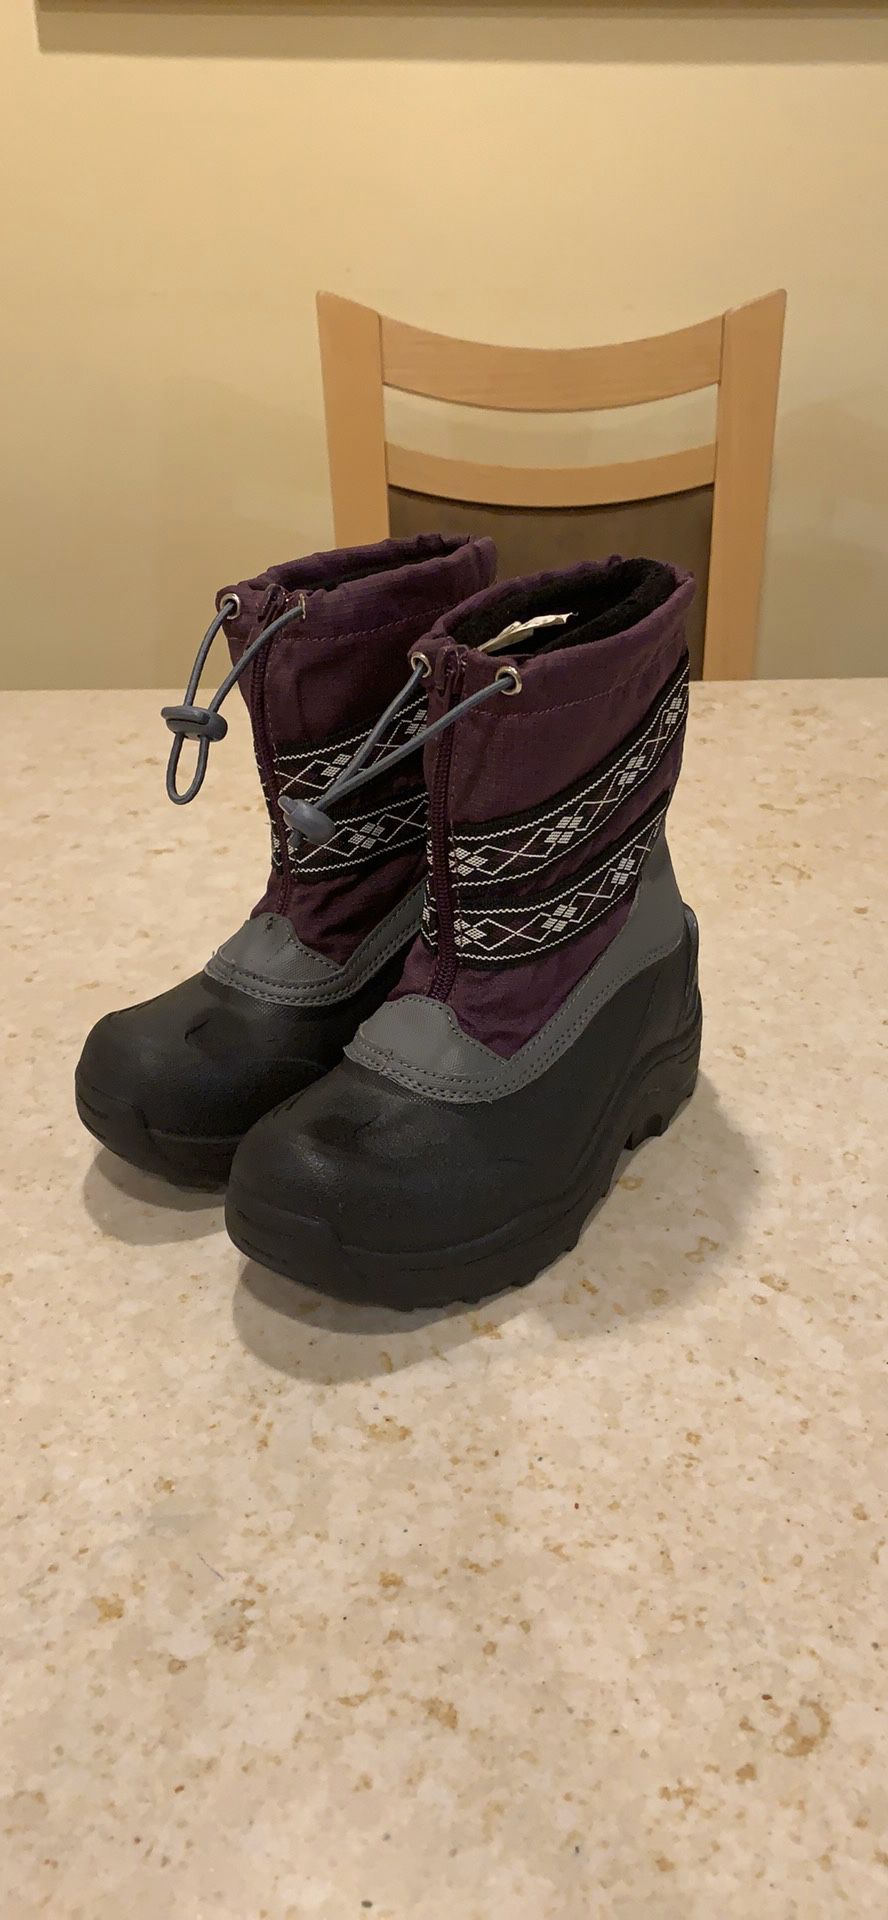 Lands end girl winter boots